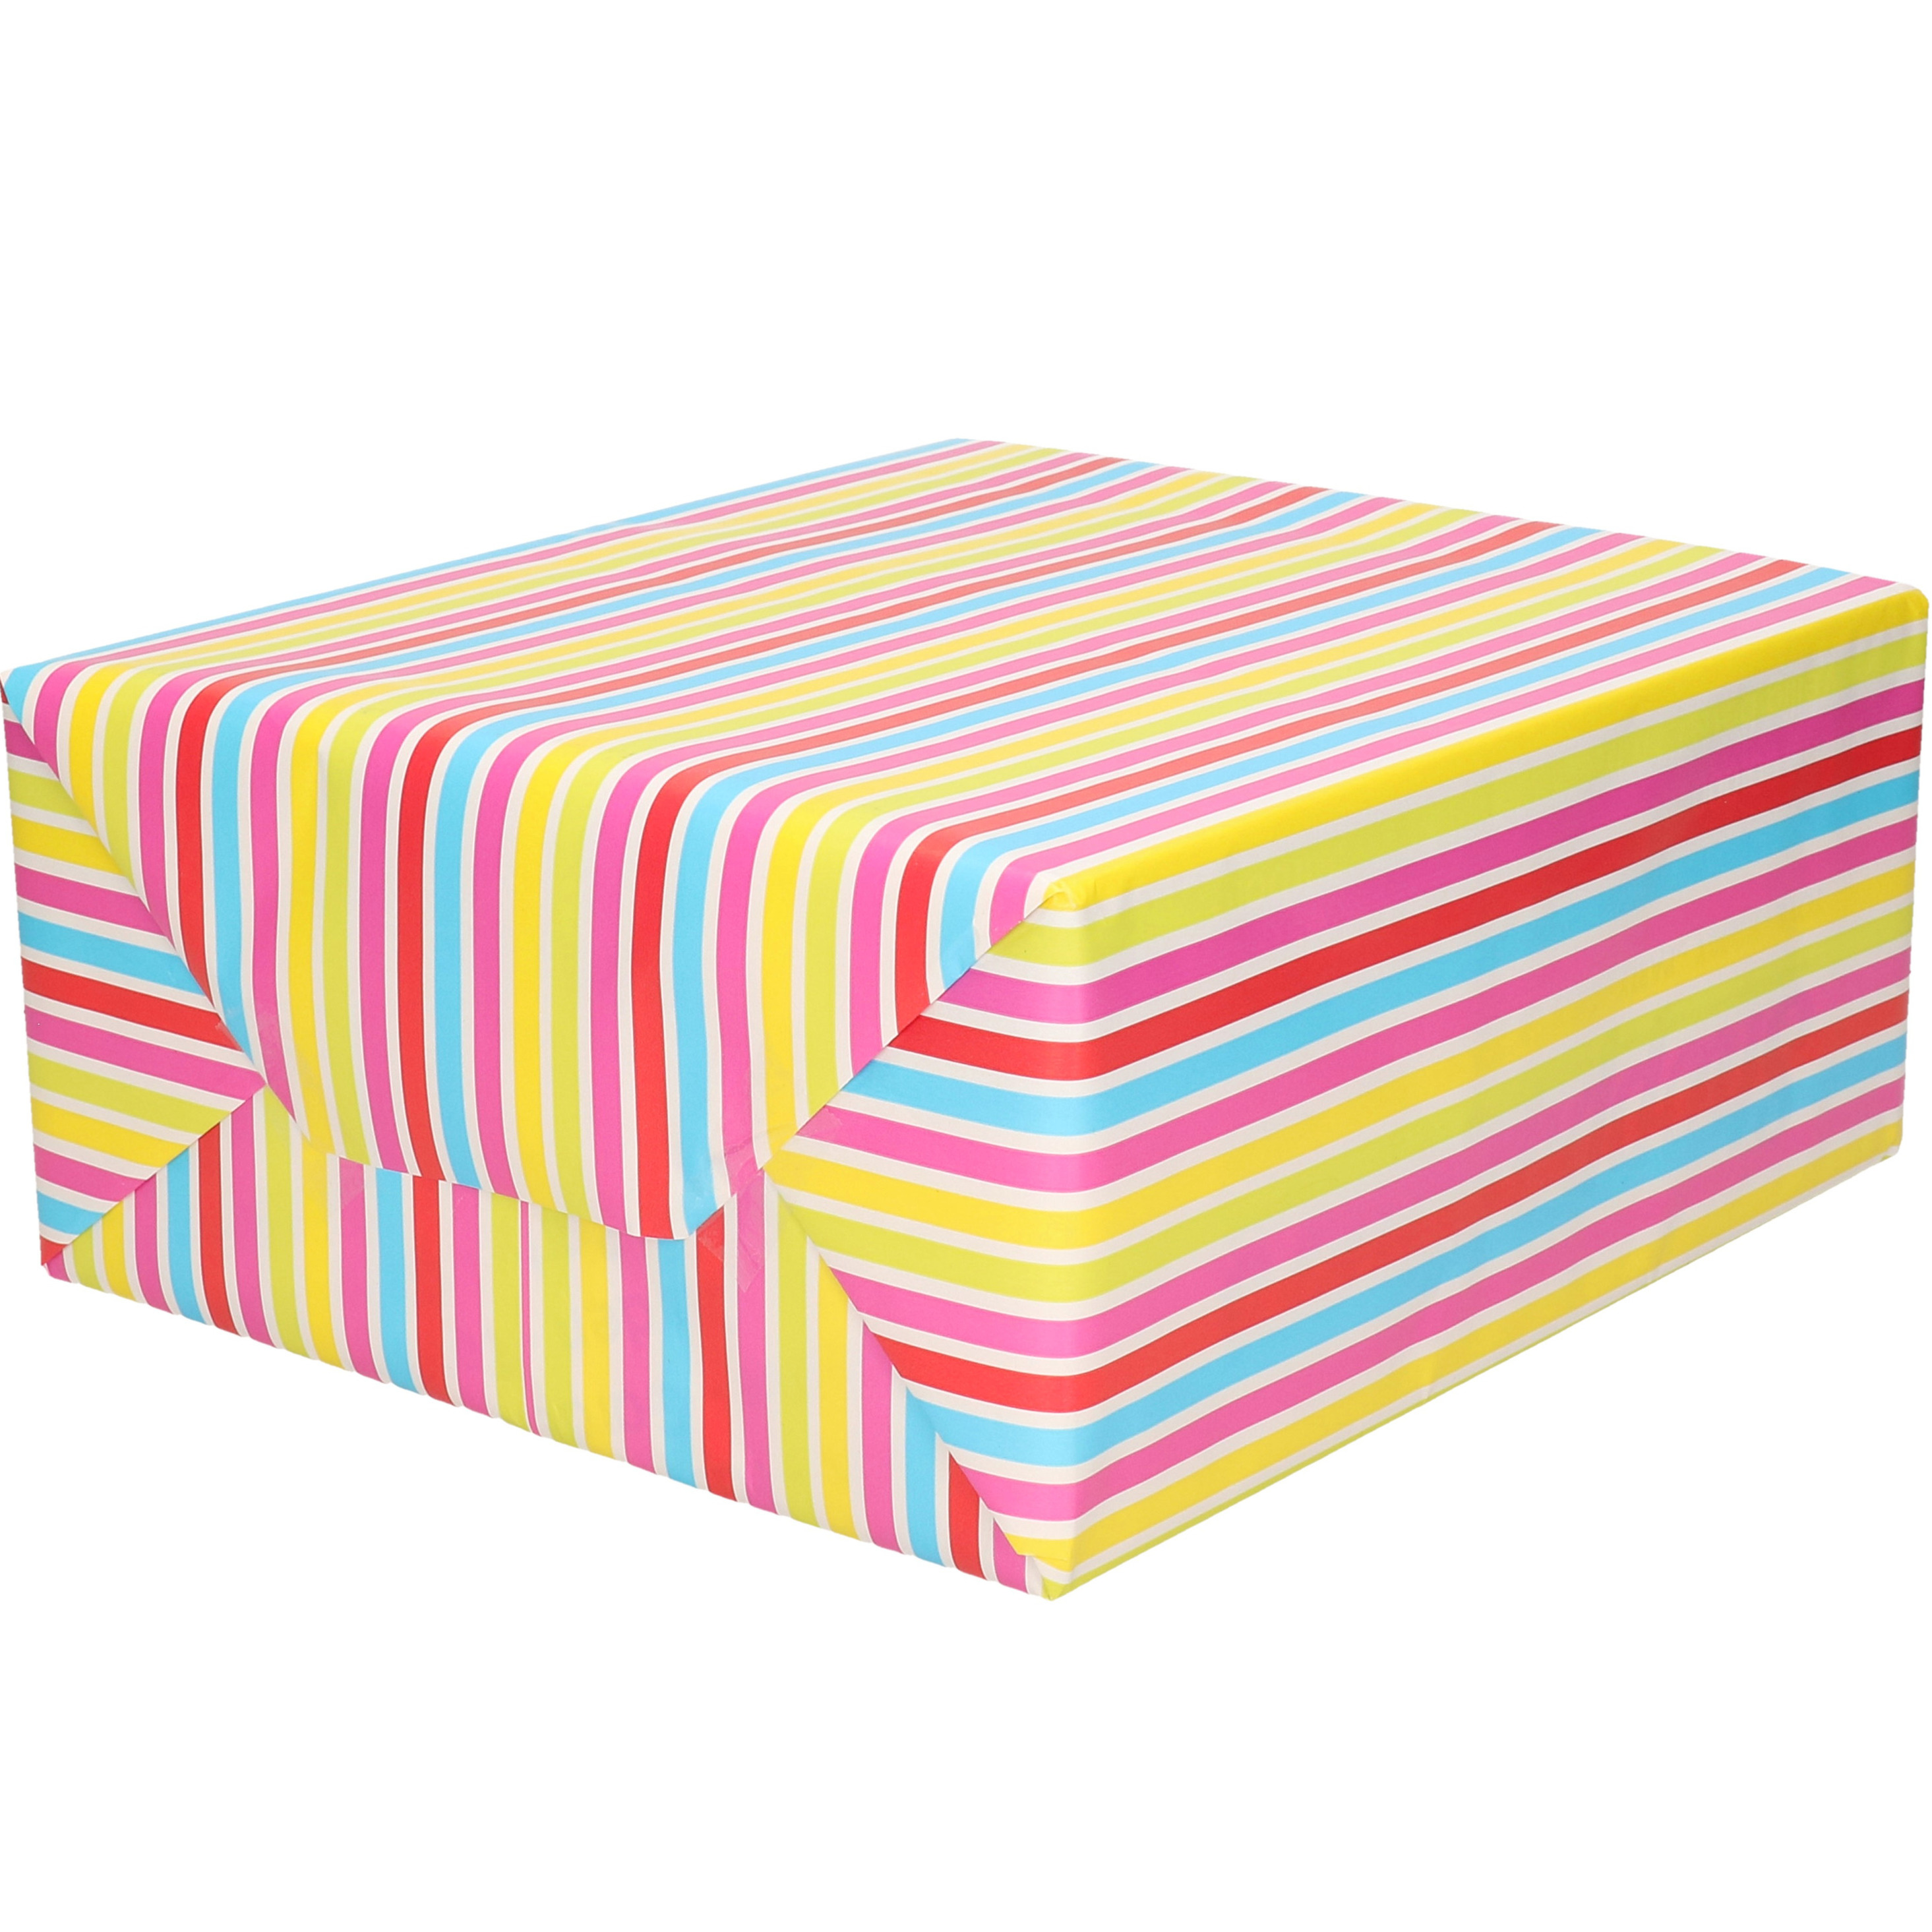 1x Rol Inpakpapier/cadeaupapier gekleurde streepjes design 200 x 70 cm